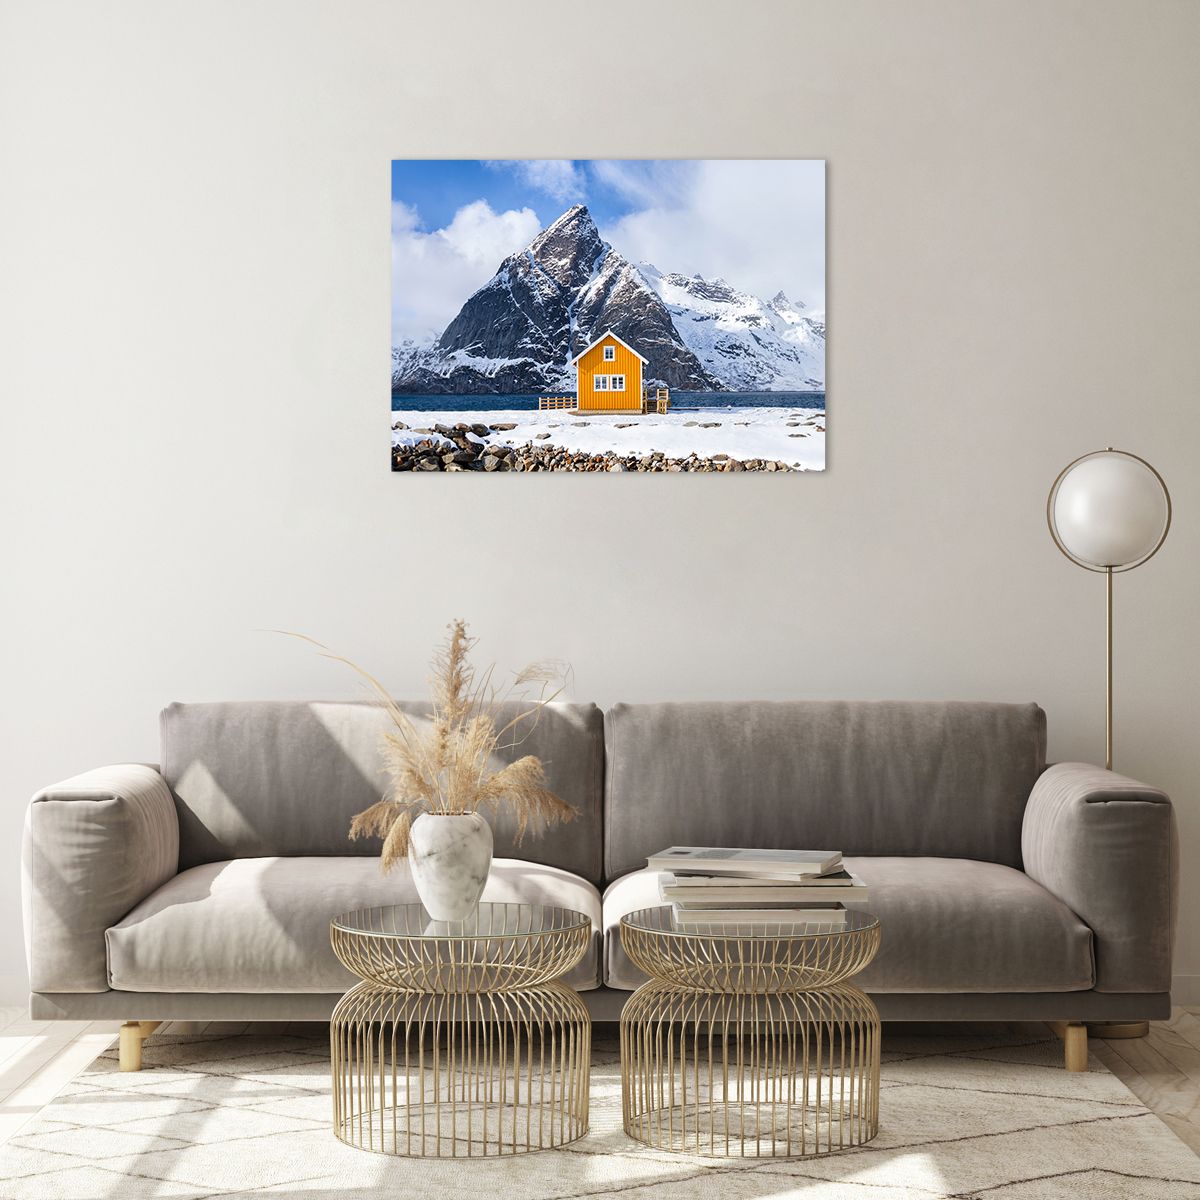 Glasbild Winter, Glasbild Alpen, Glasbild Berge